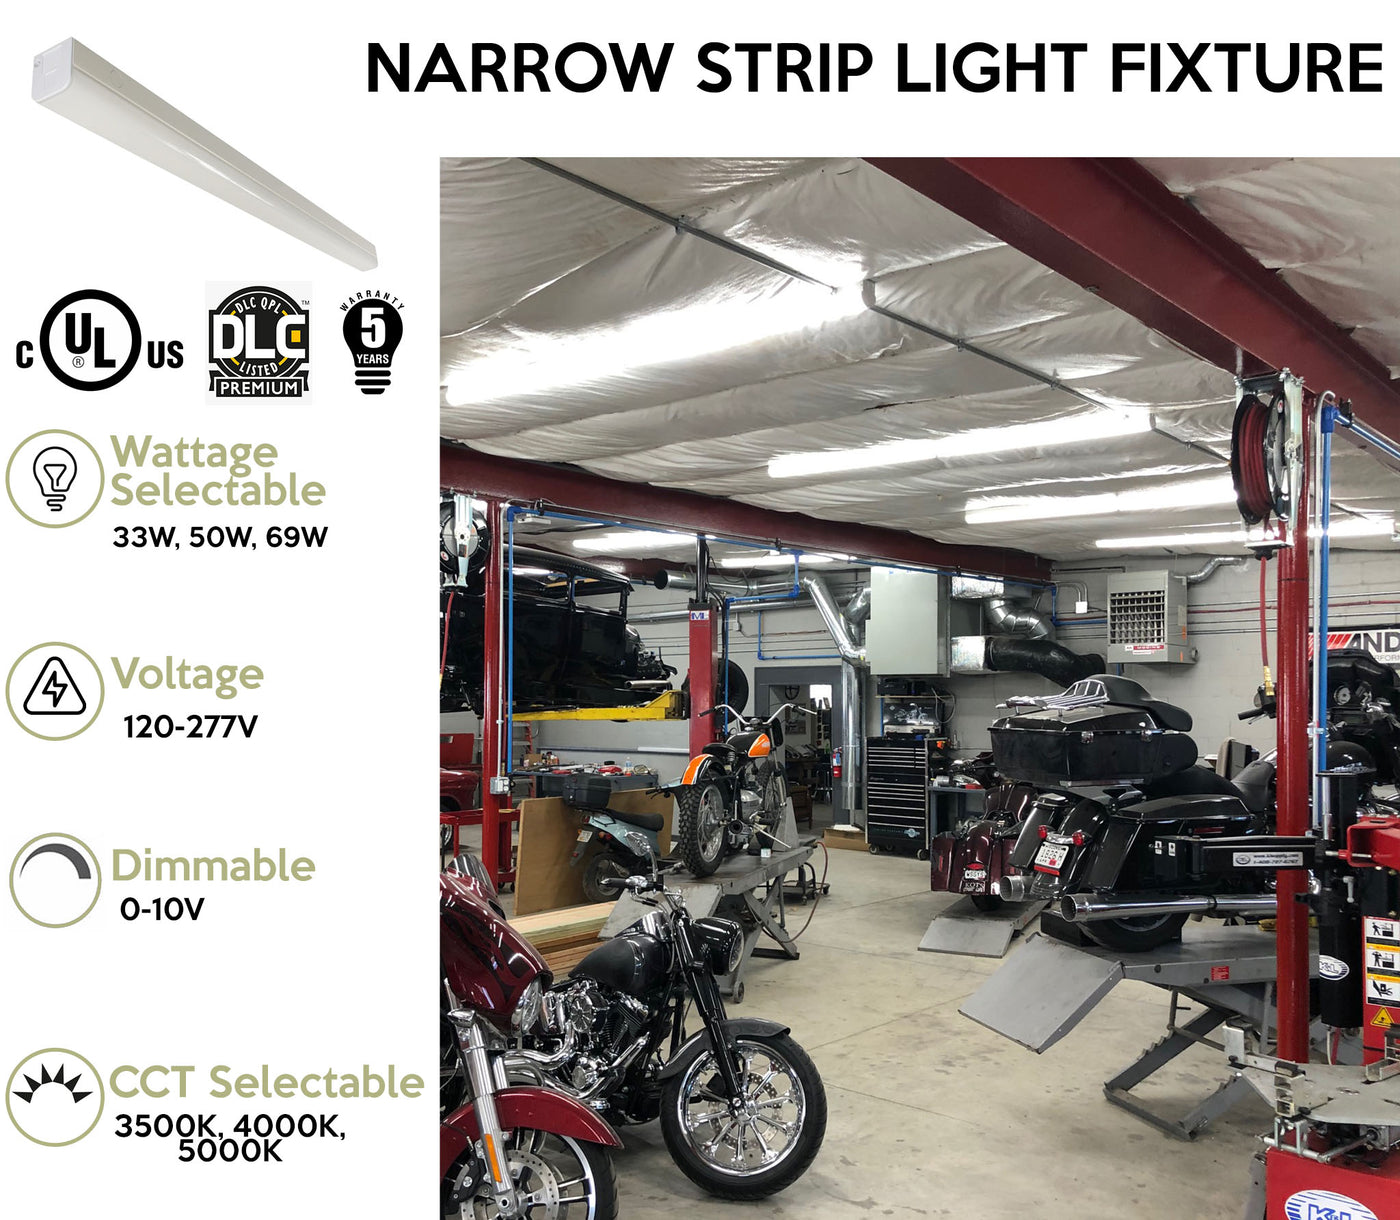 8FT LED Narrow Strip Light, Wattage and CCT Selectable, 120-277V